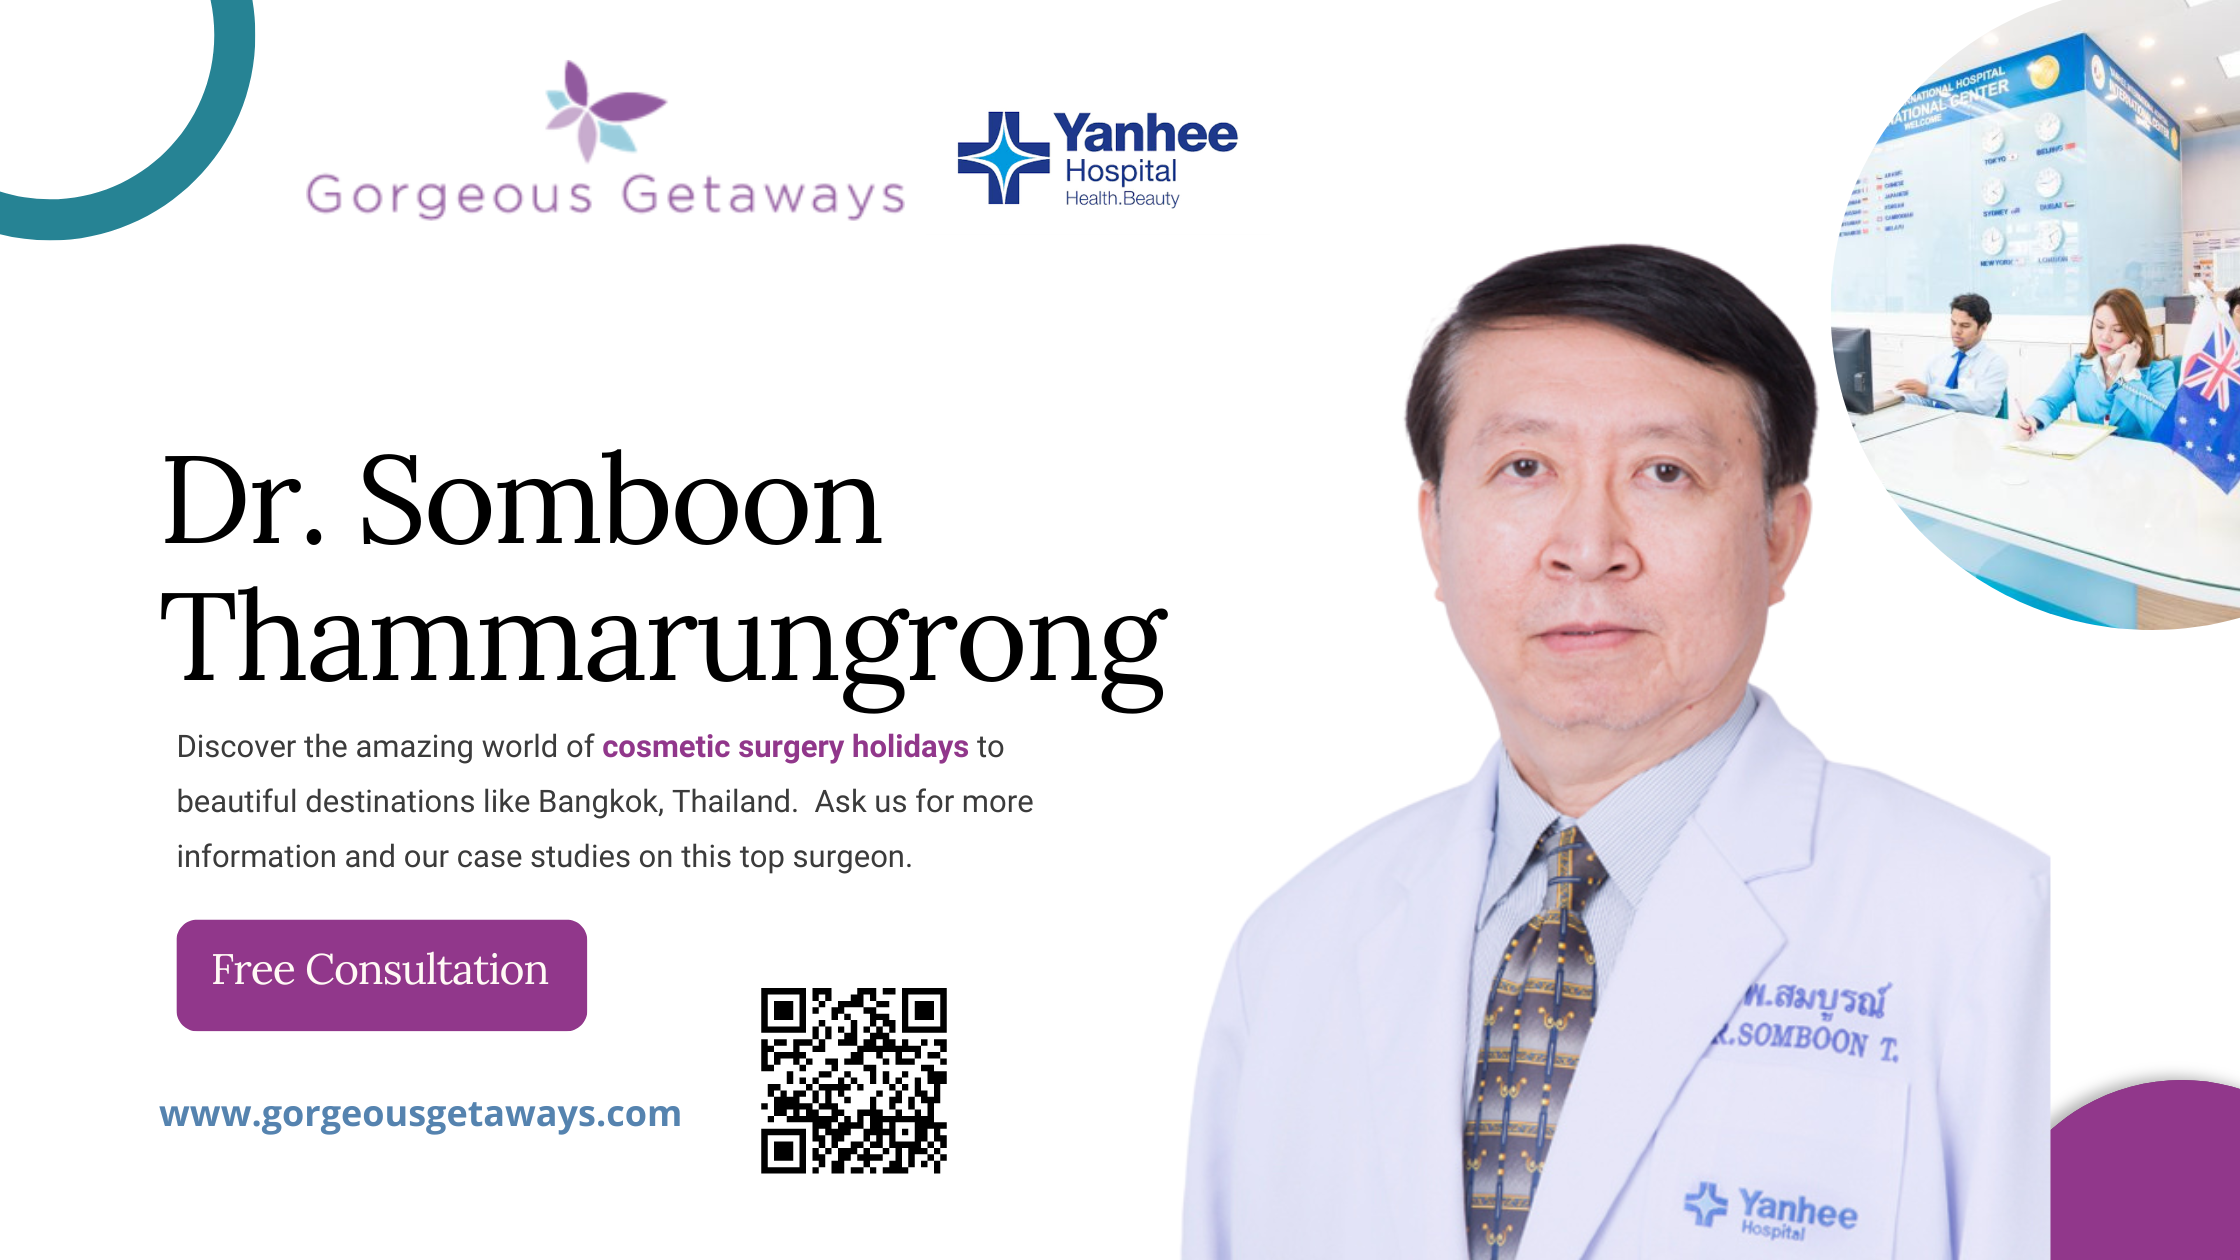 Dr. Somboon Thammarungrong